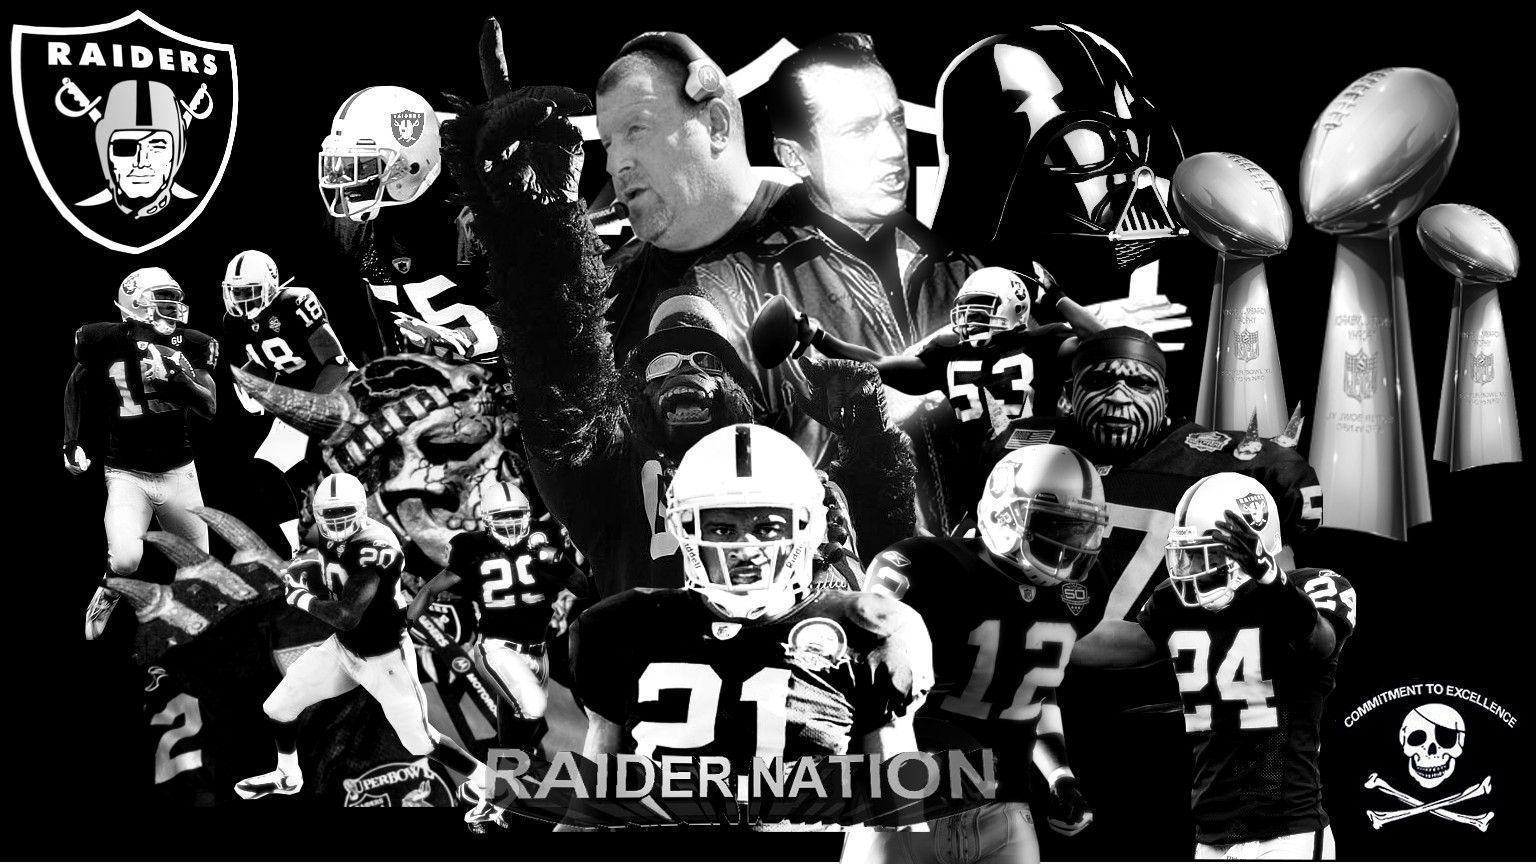 Oakland Raiders wallpaper. Oakland Raiders background